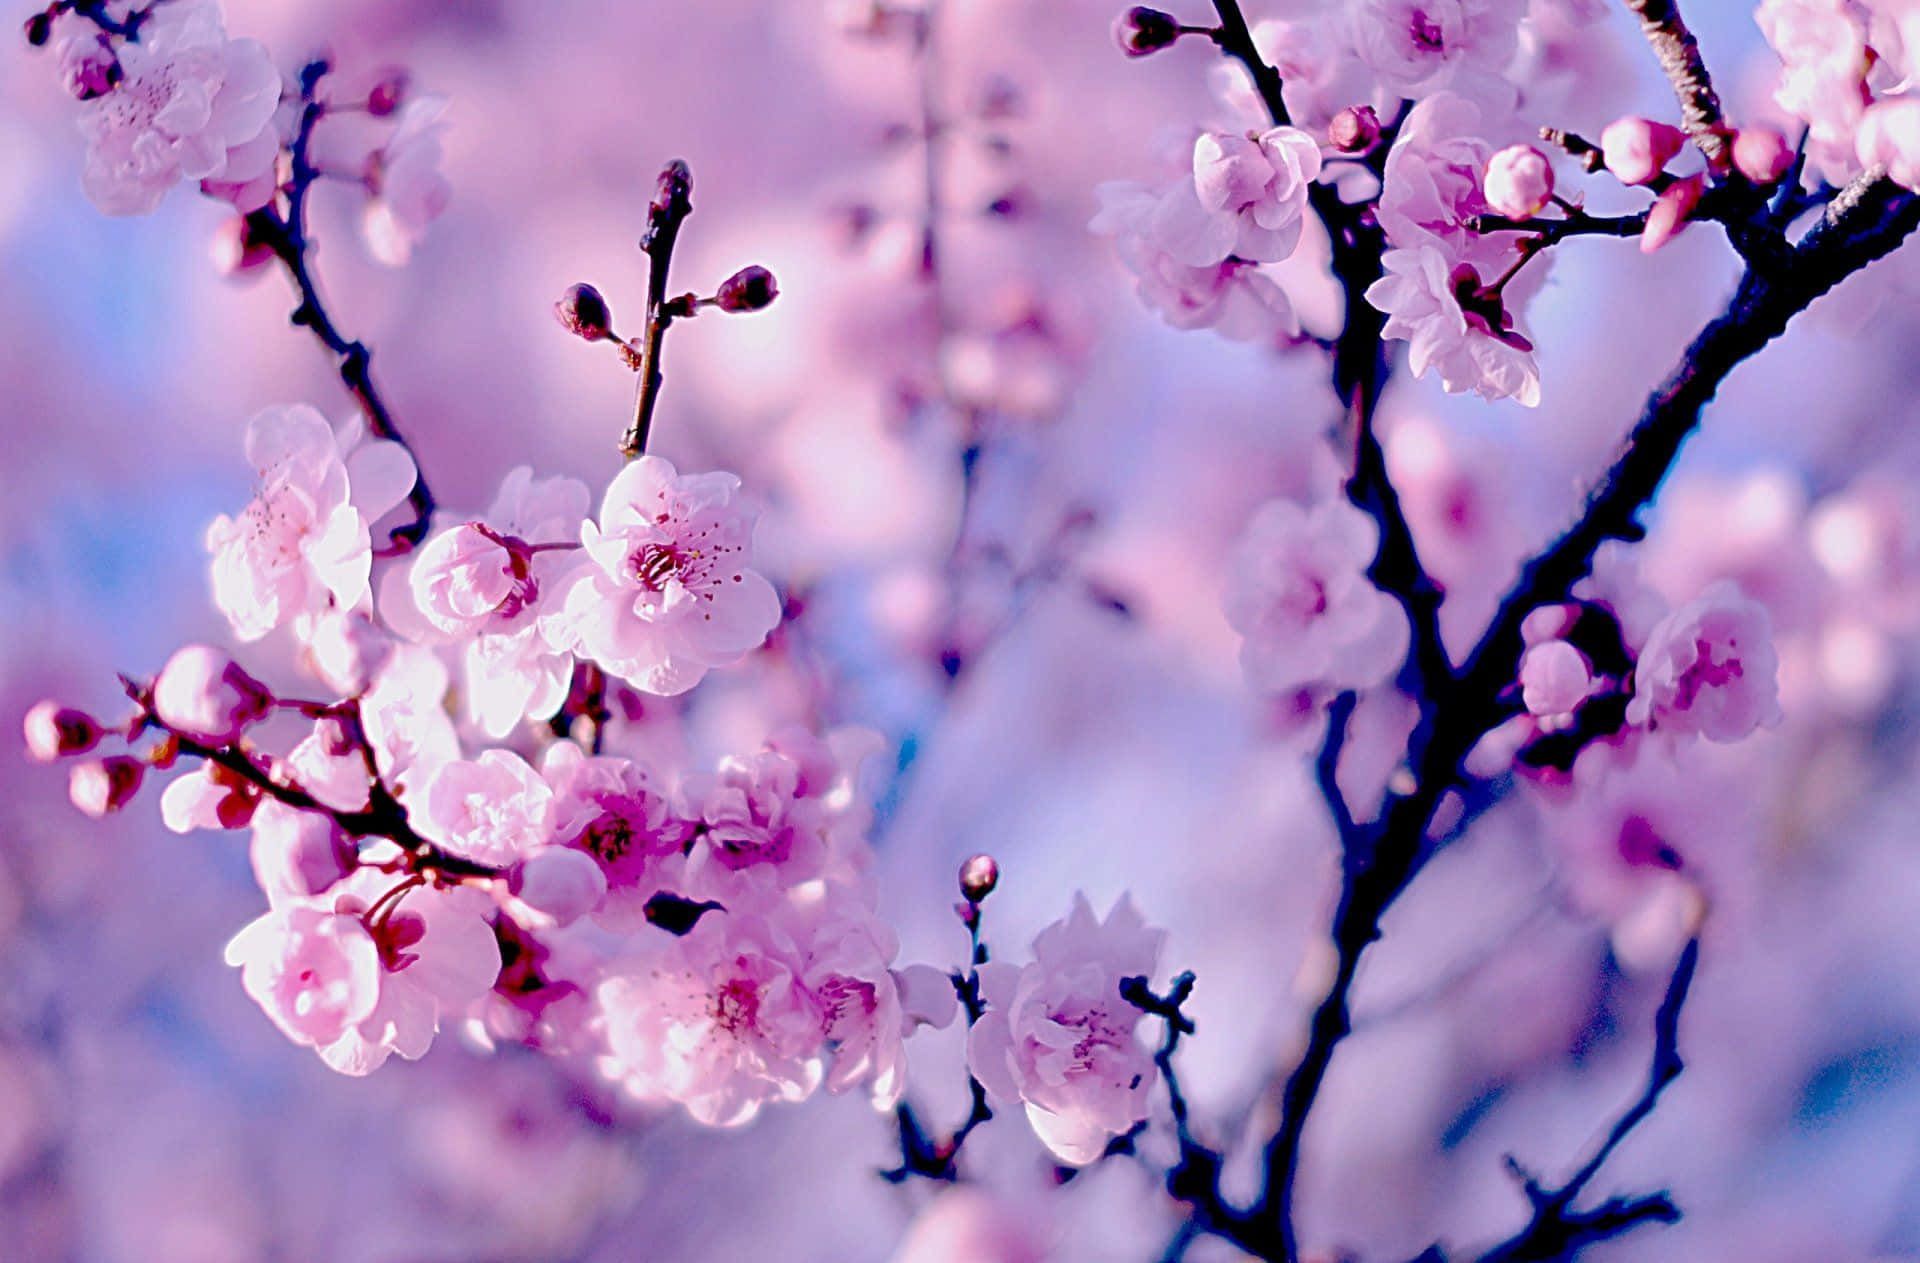 Dark Cherry Blossom Trees Close-up Wallpaper